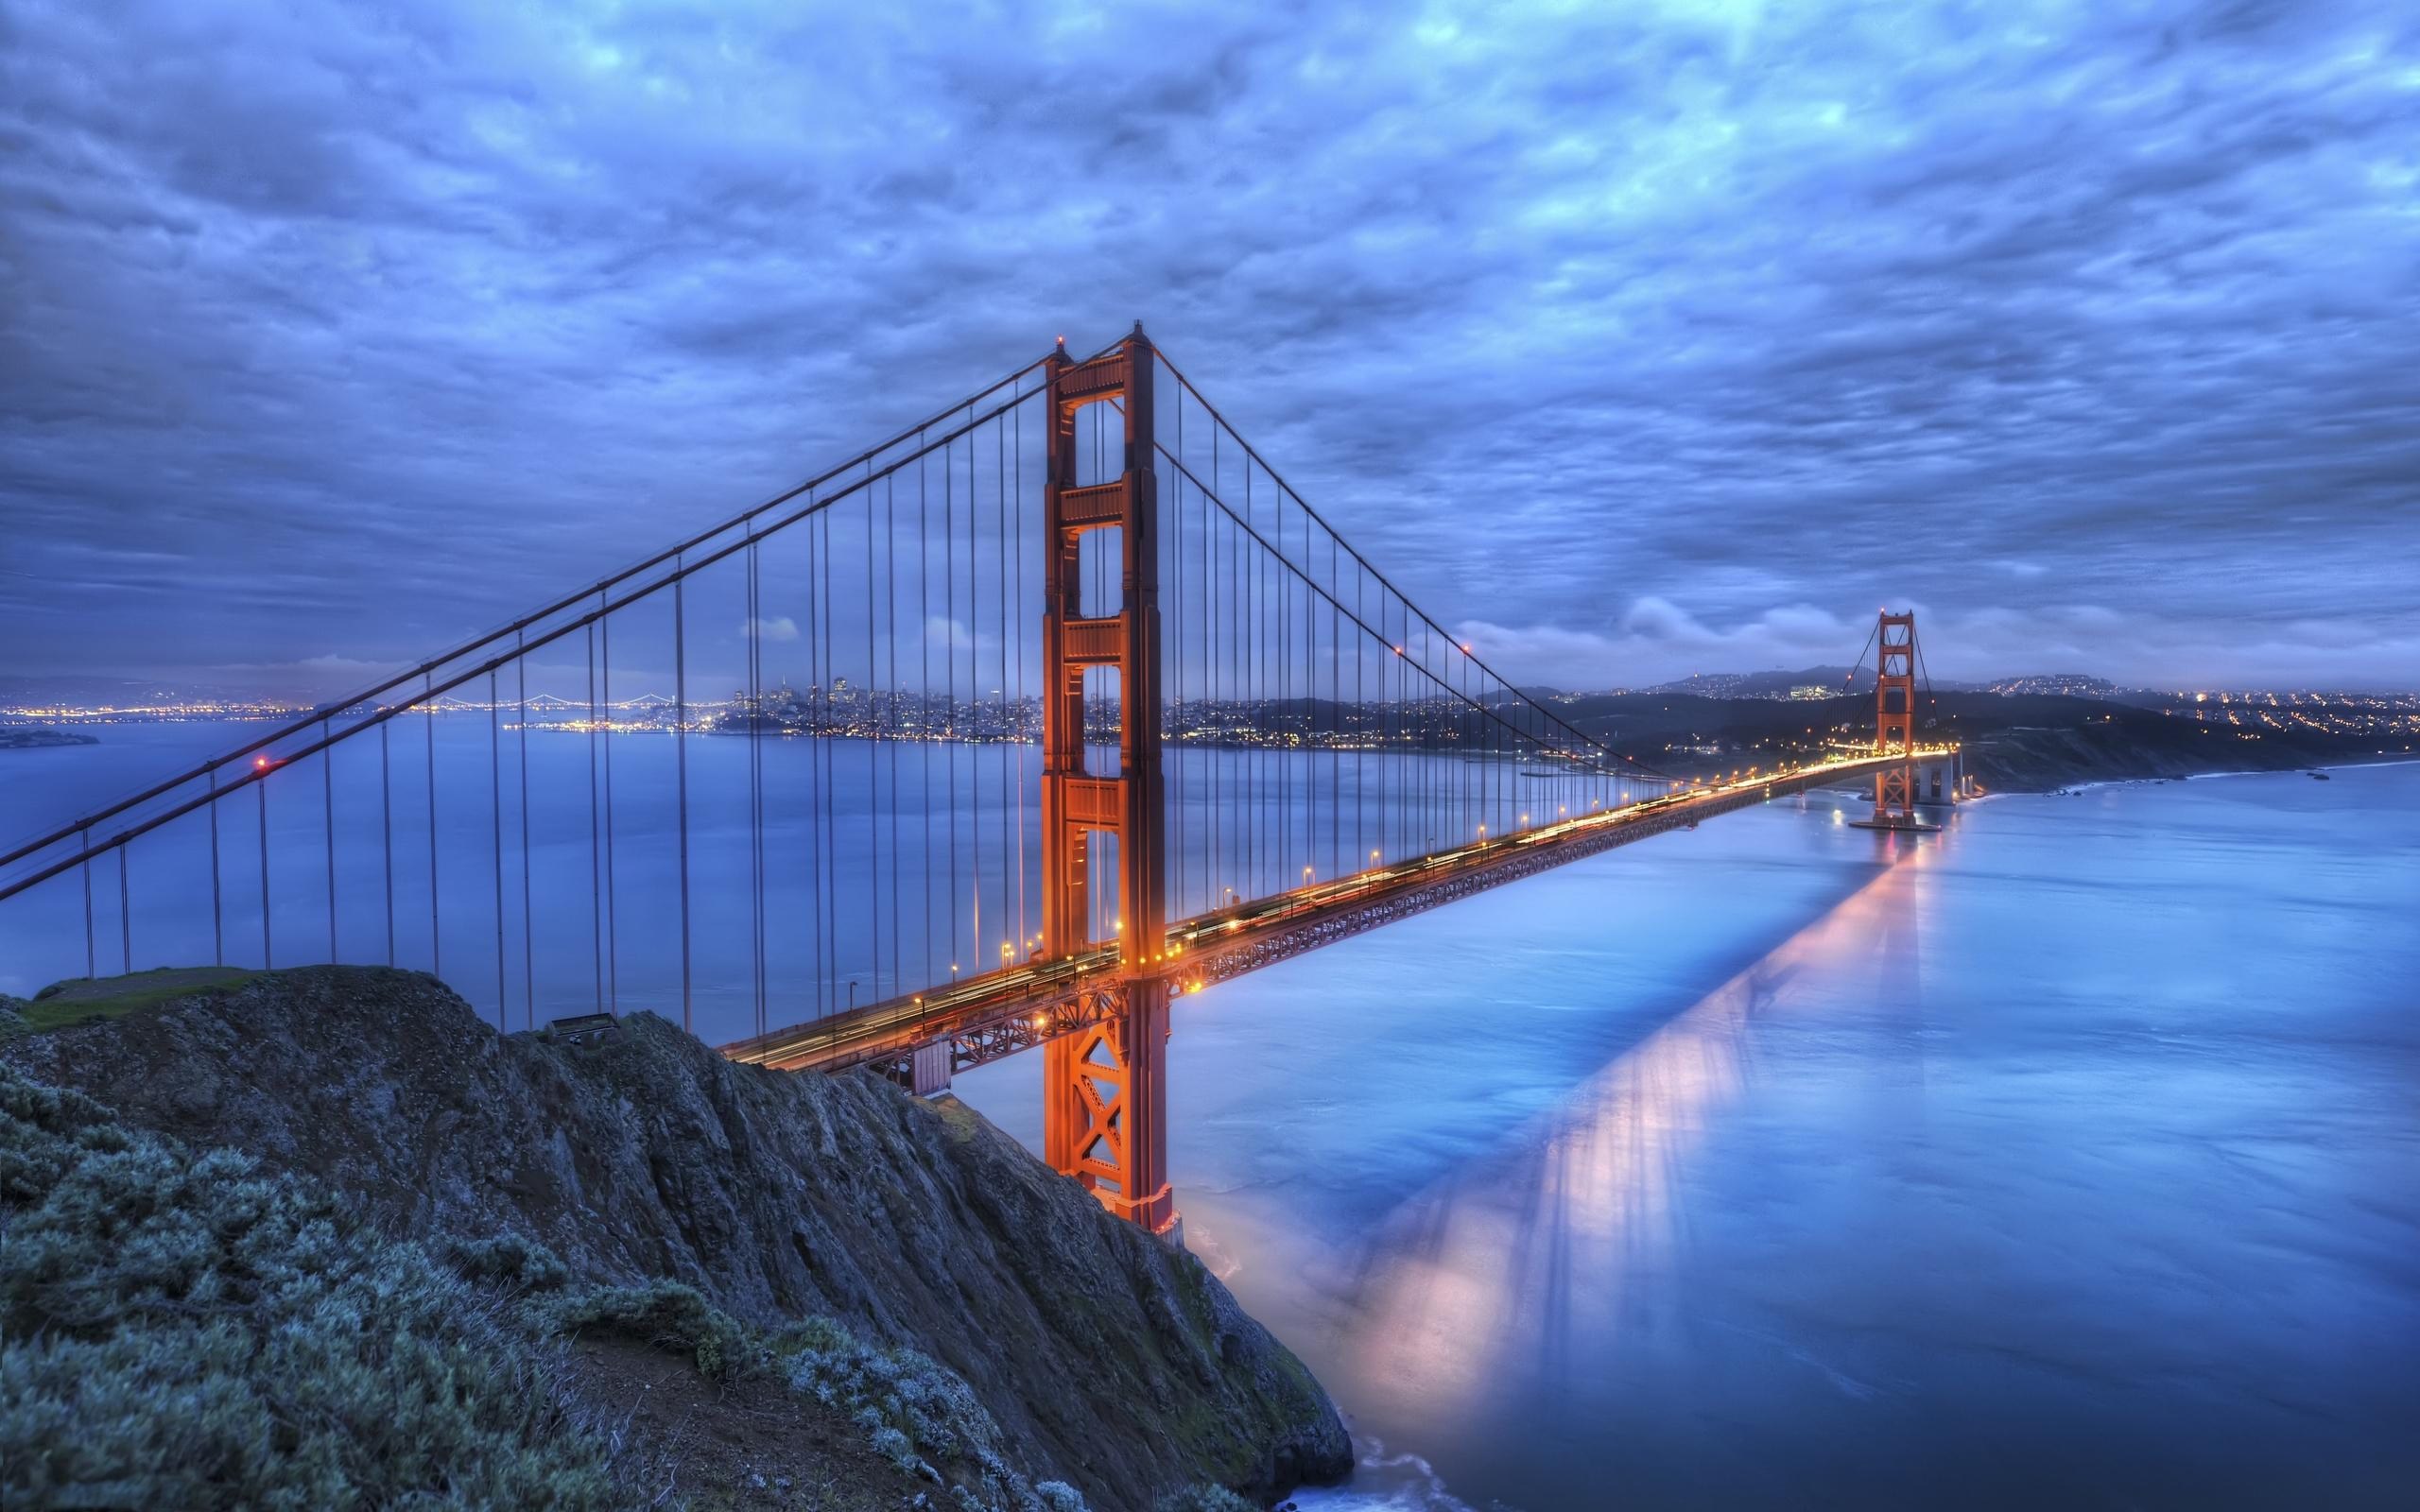 HDR Golden Gate Wallpaper